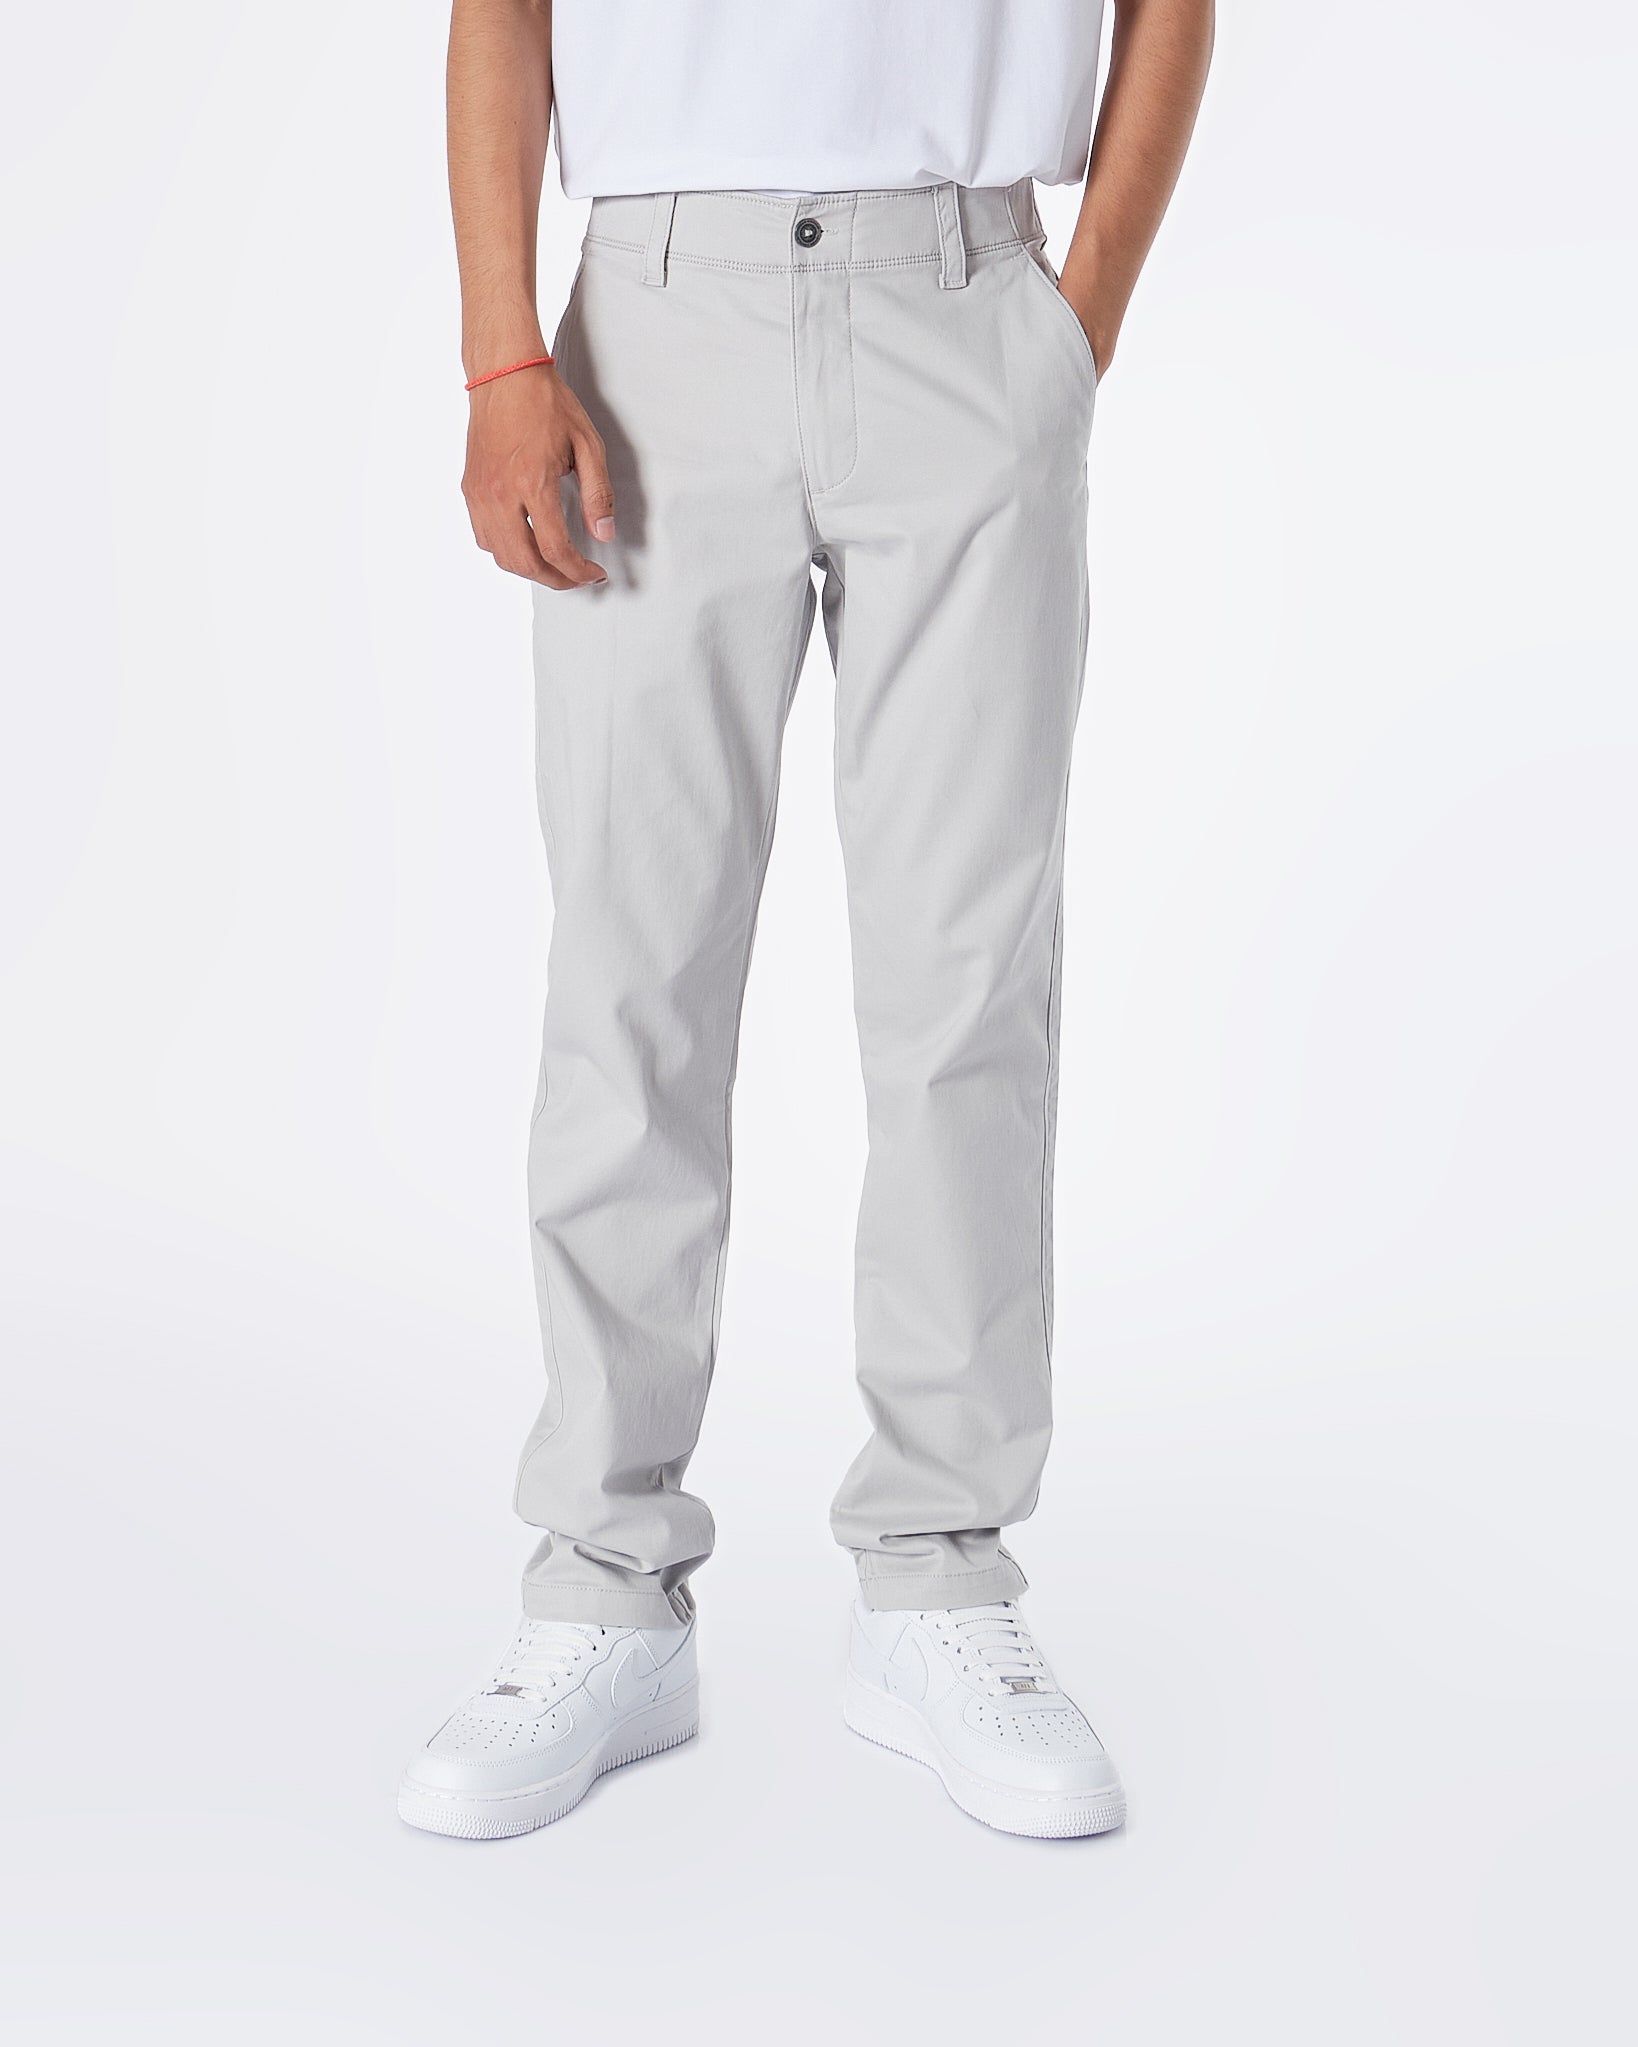 MOI OUTFIT-UA Casual Fit Men Grey Khaki Pants 28.90